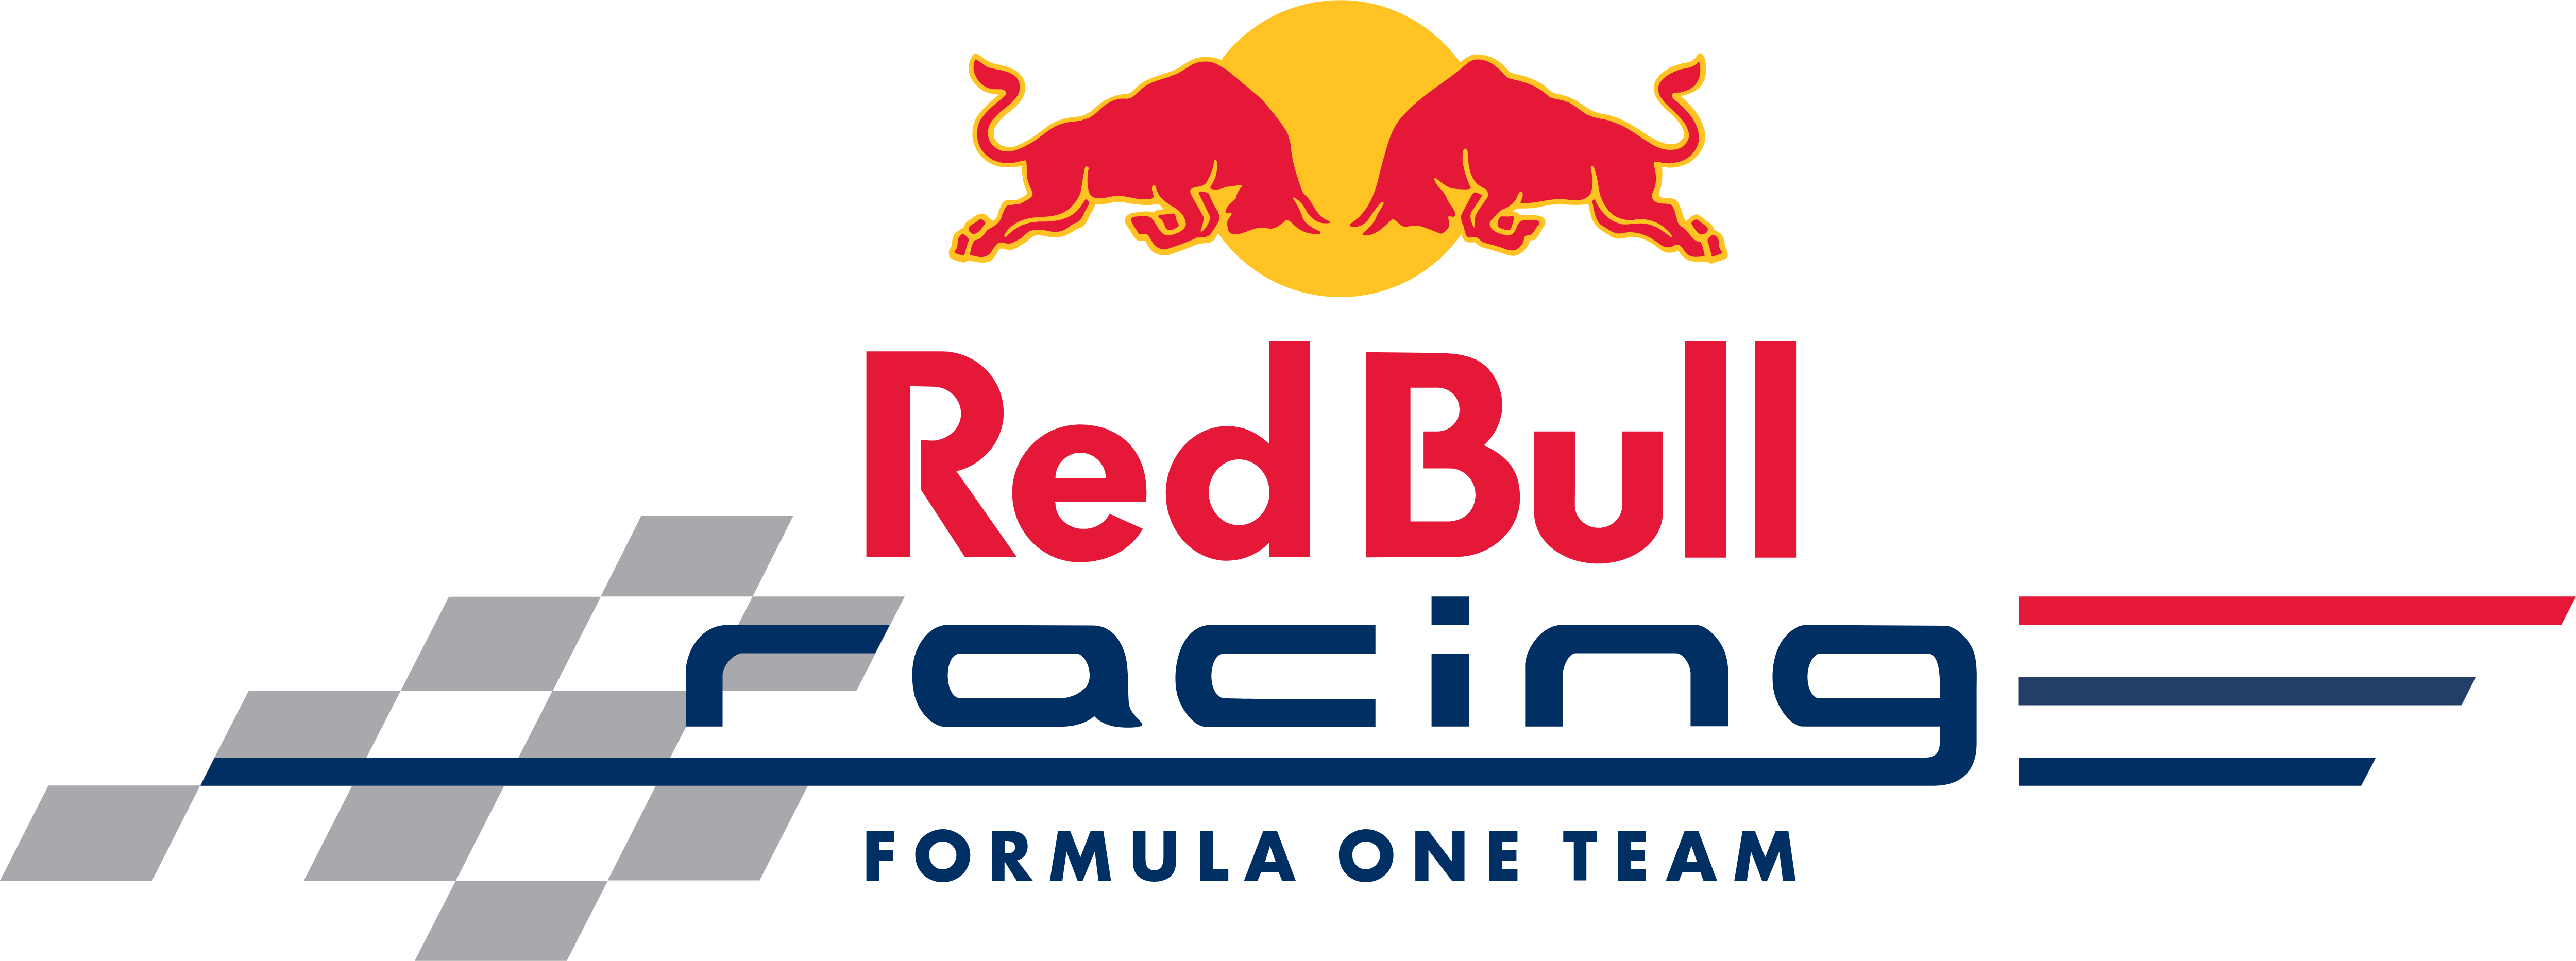 Red Racing Logo - Red Bull Sport